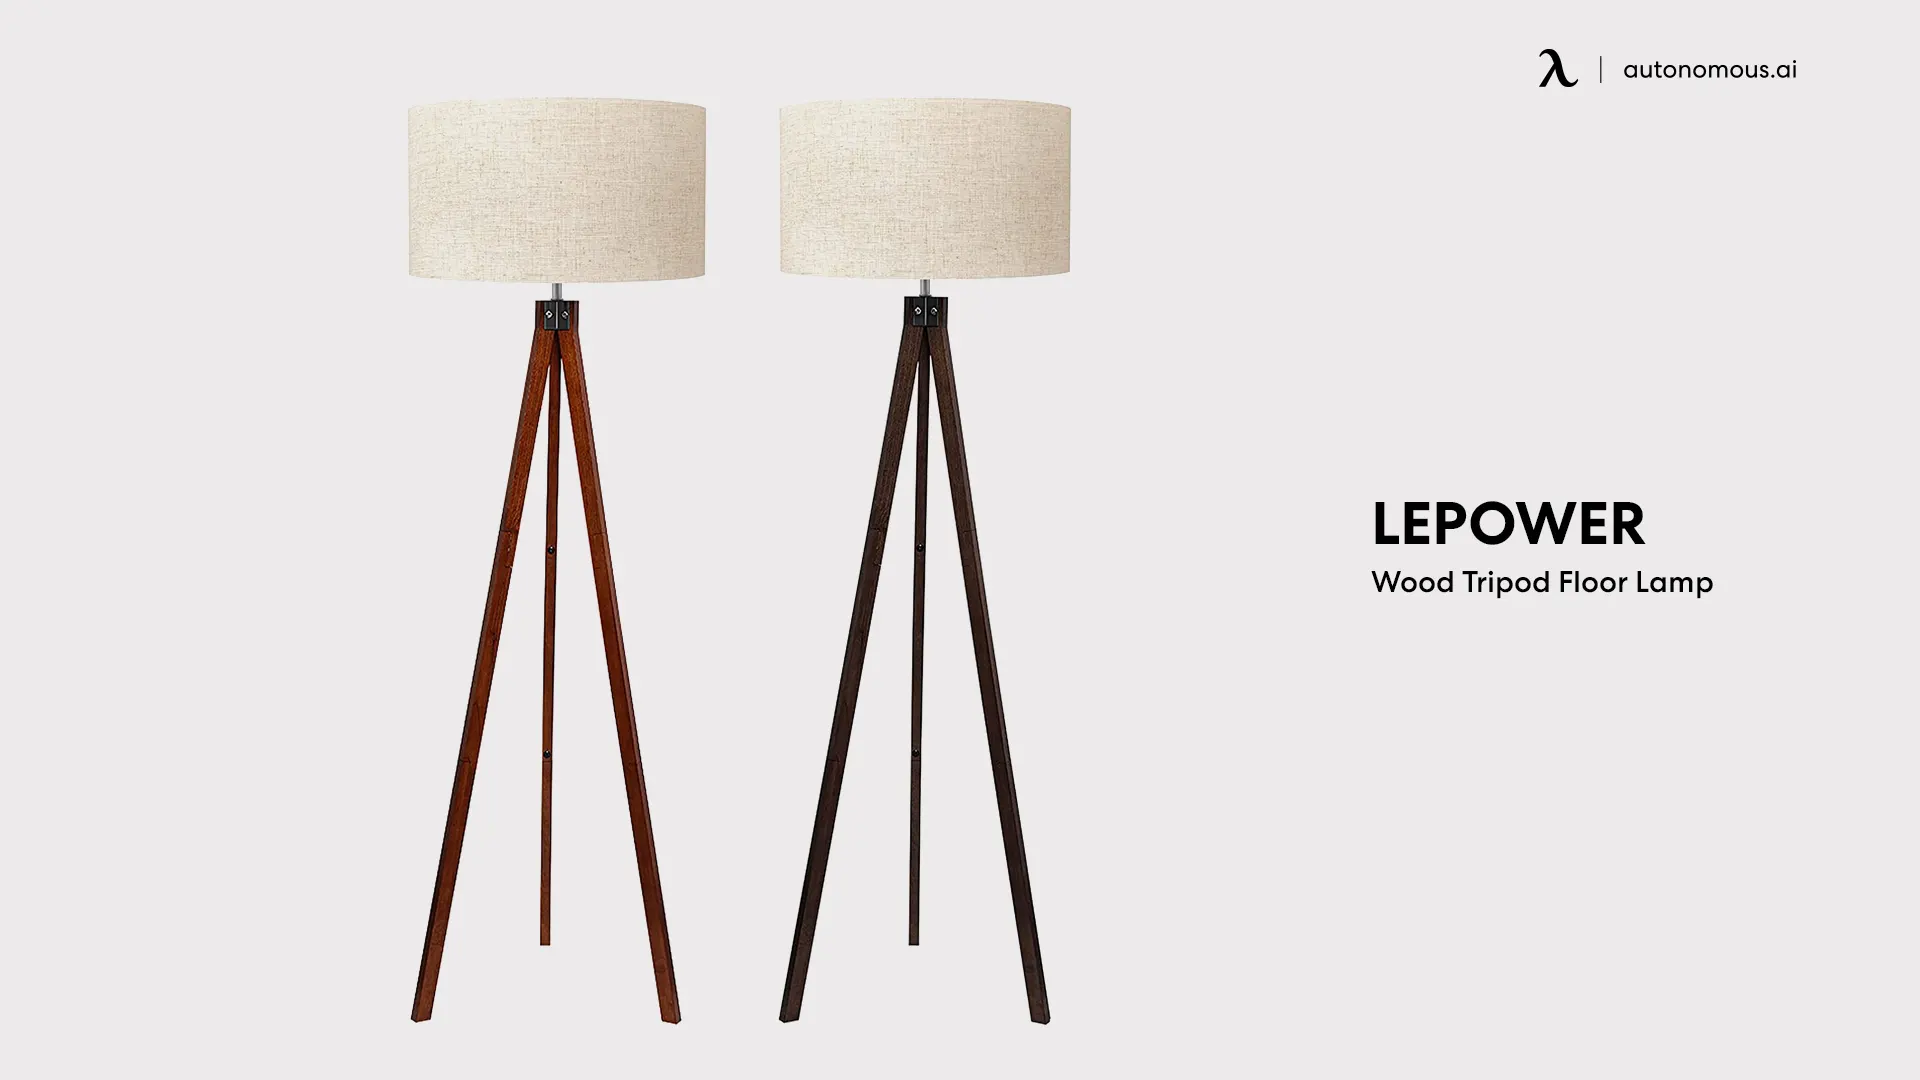 Lepower Wood Tripod Floor Lamp